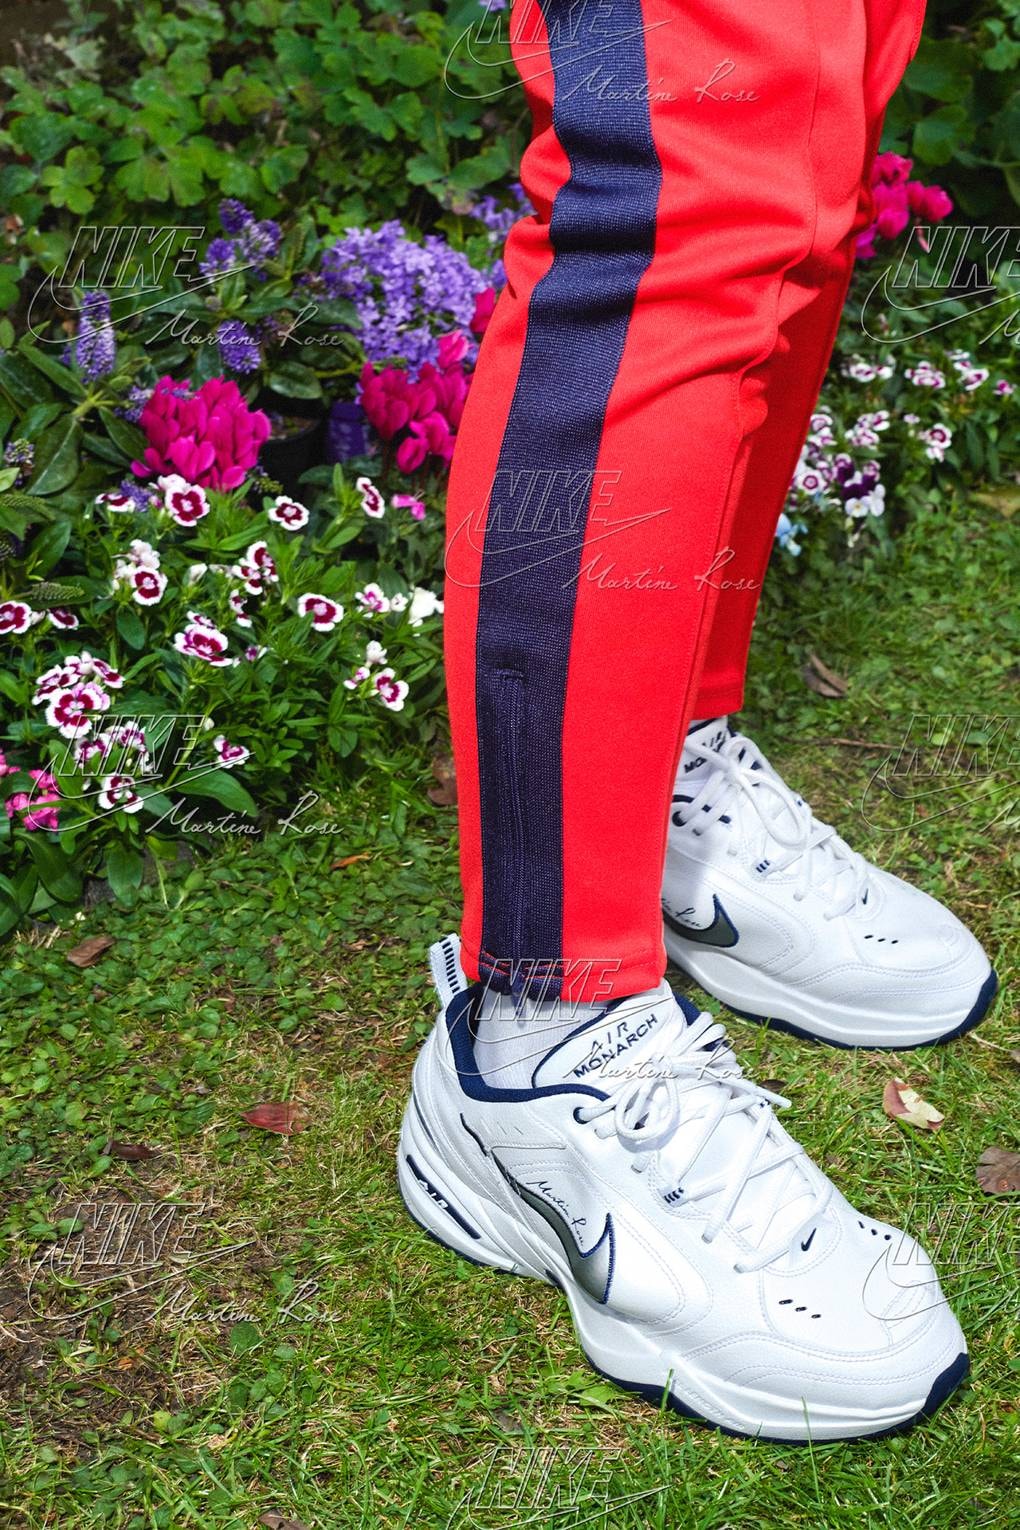 Martine Rose x Nike 全新聯乘系列於 Craigslist 搶先發售